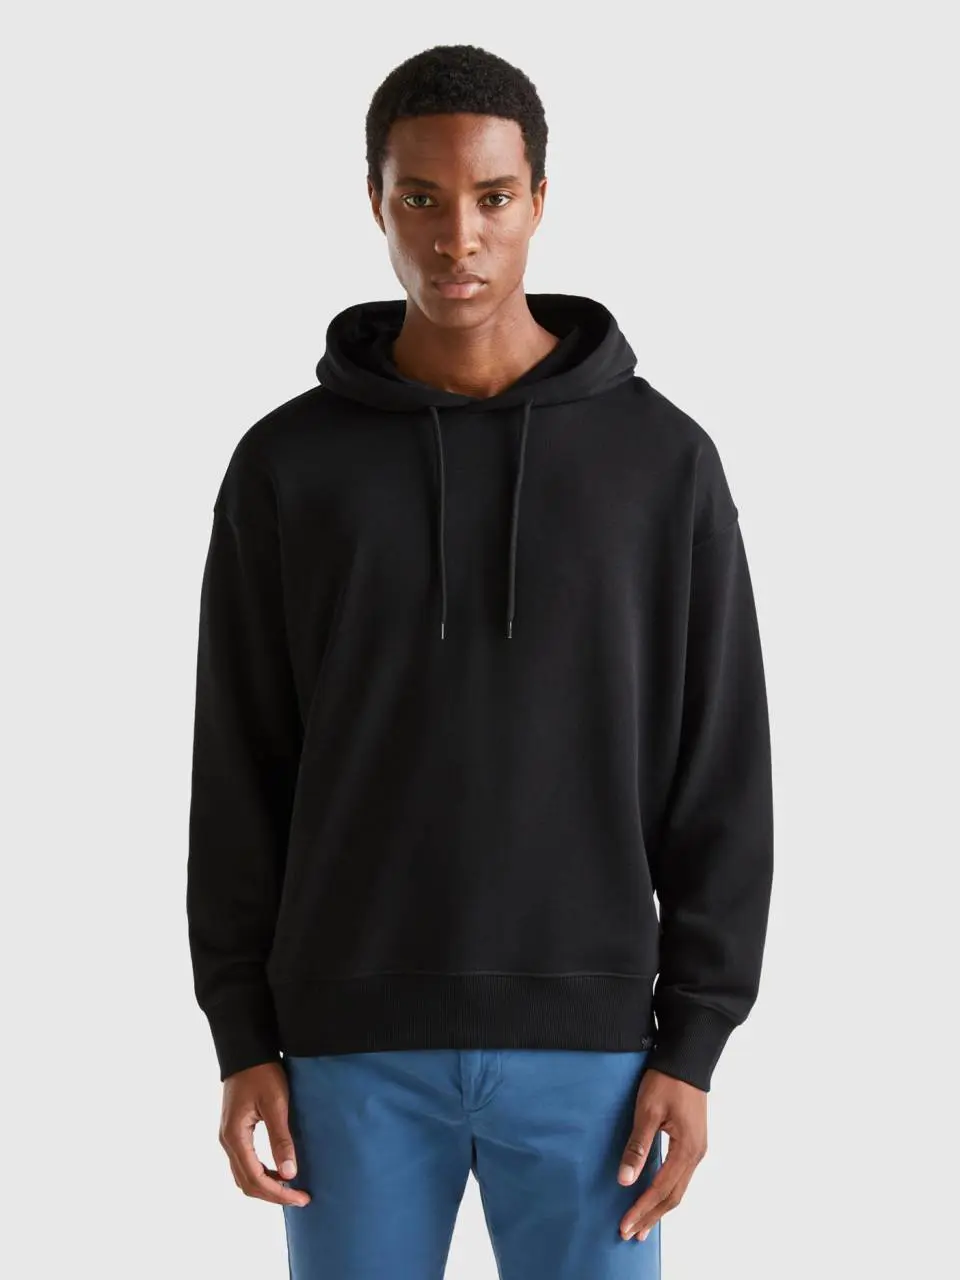 Benetton 100% cotton hoodie. 1